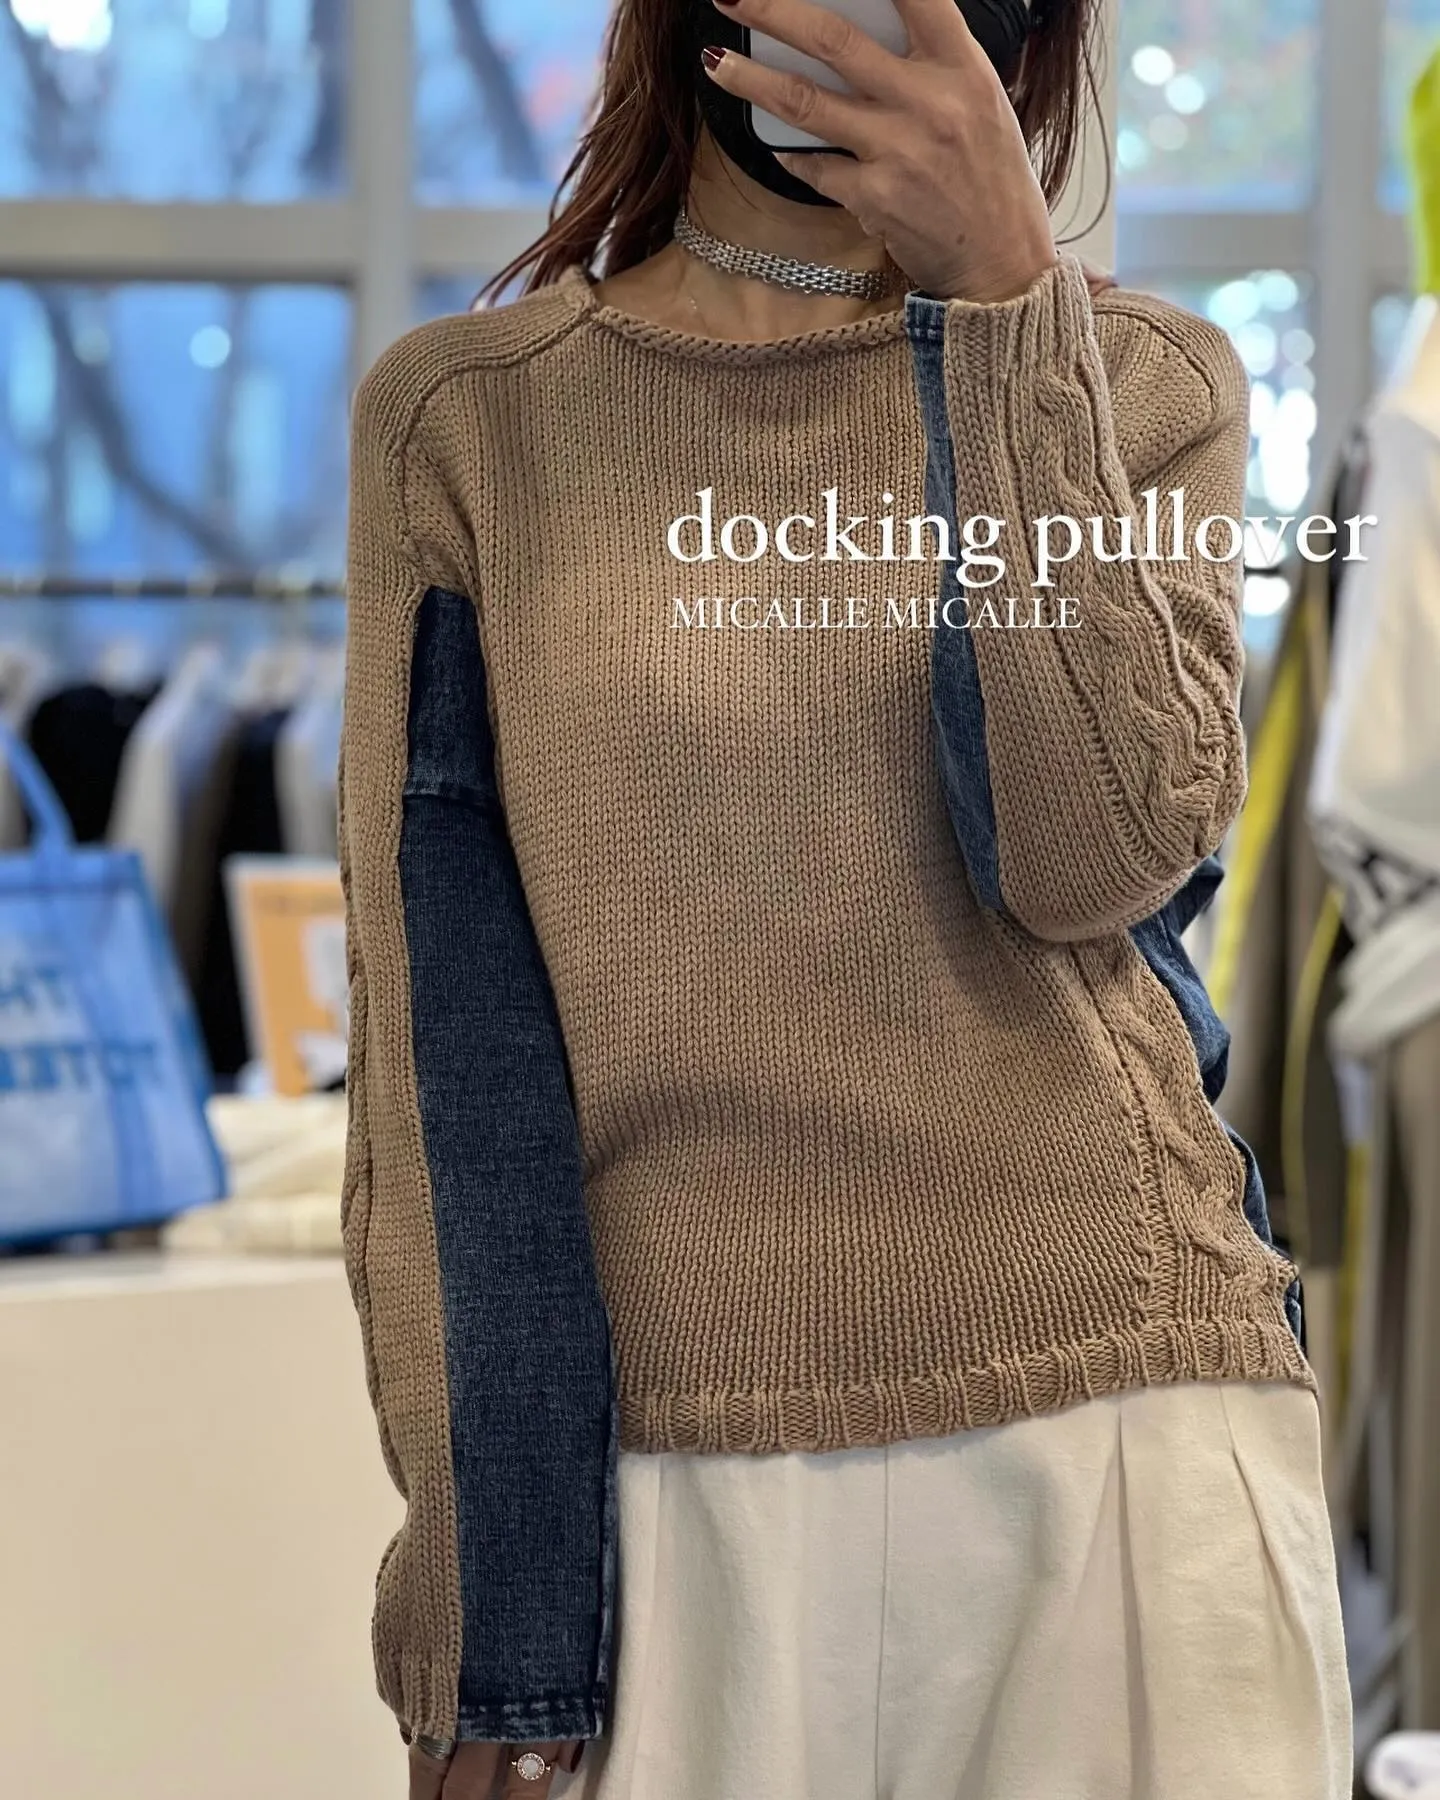 docking pullover